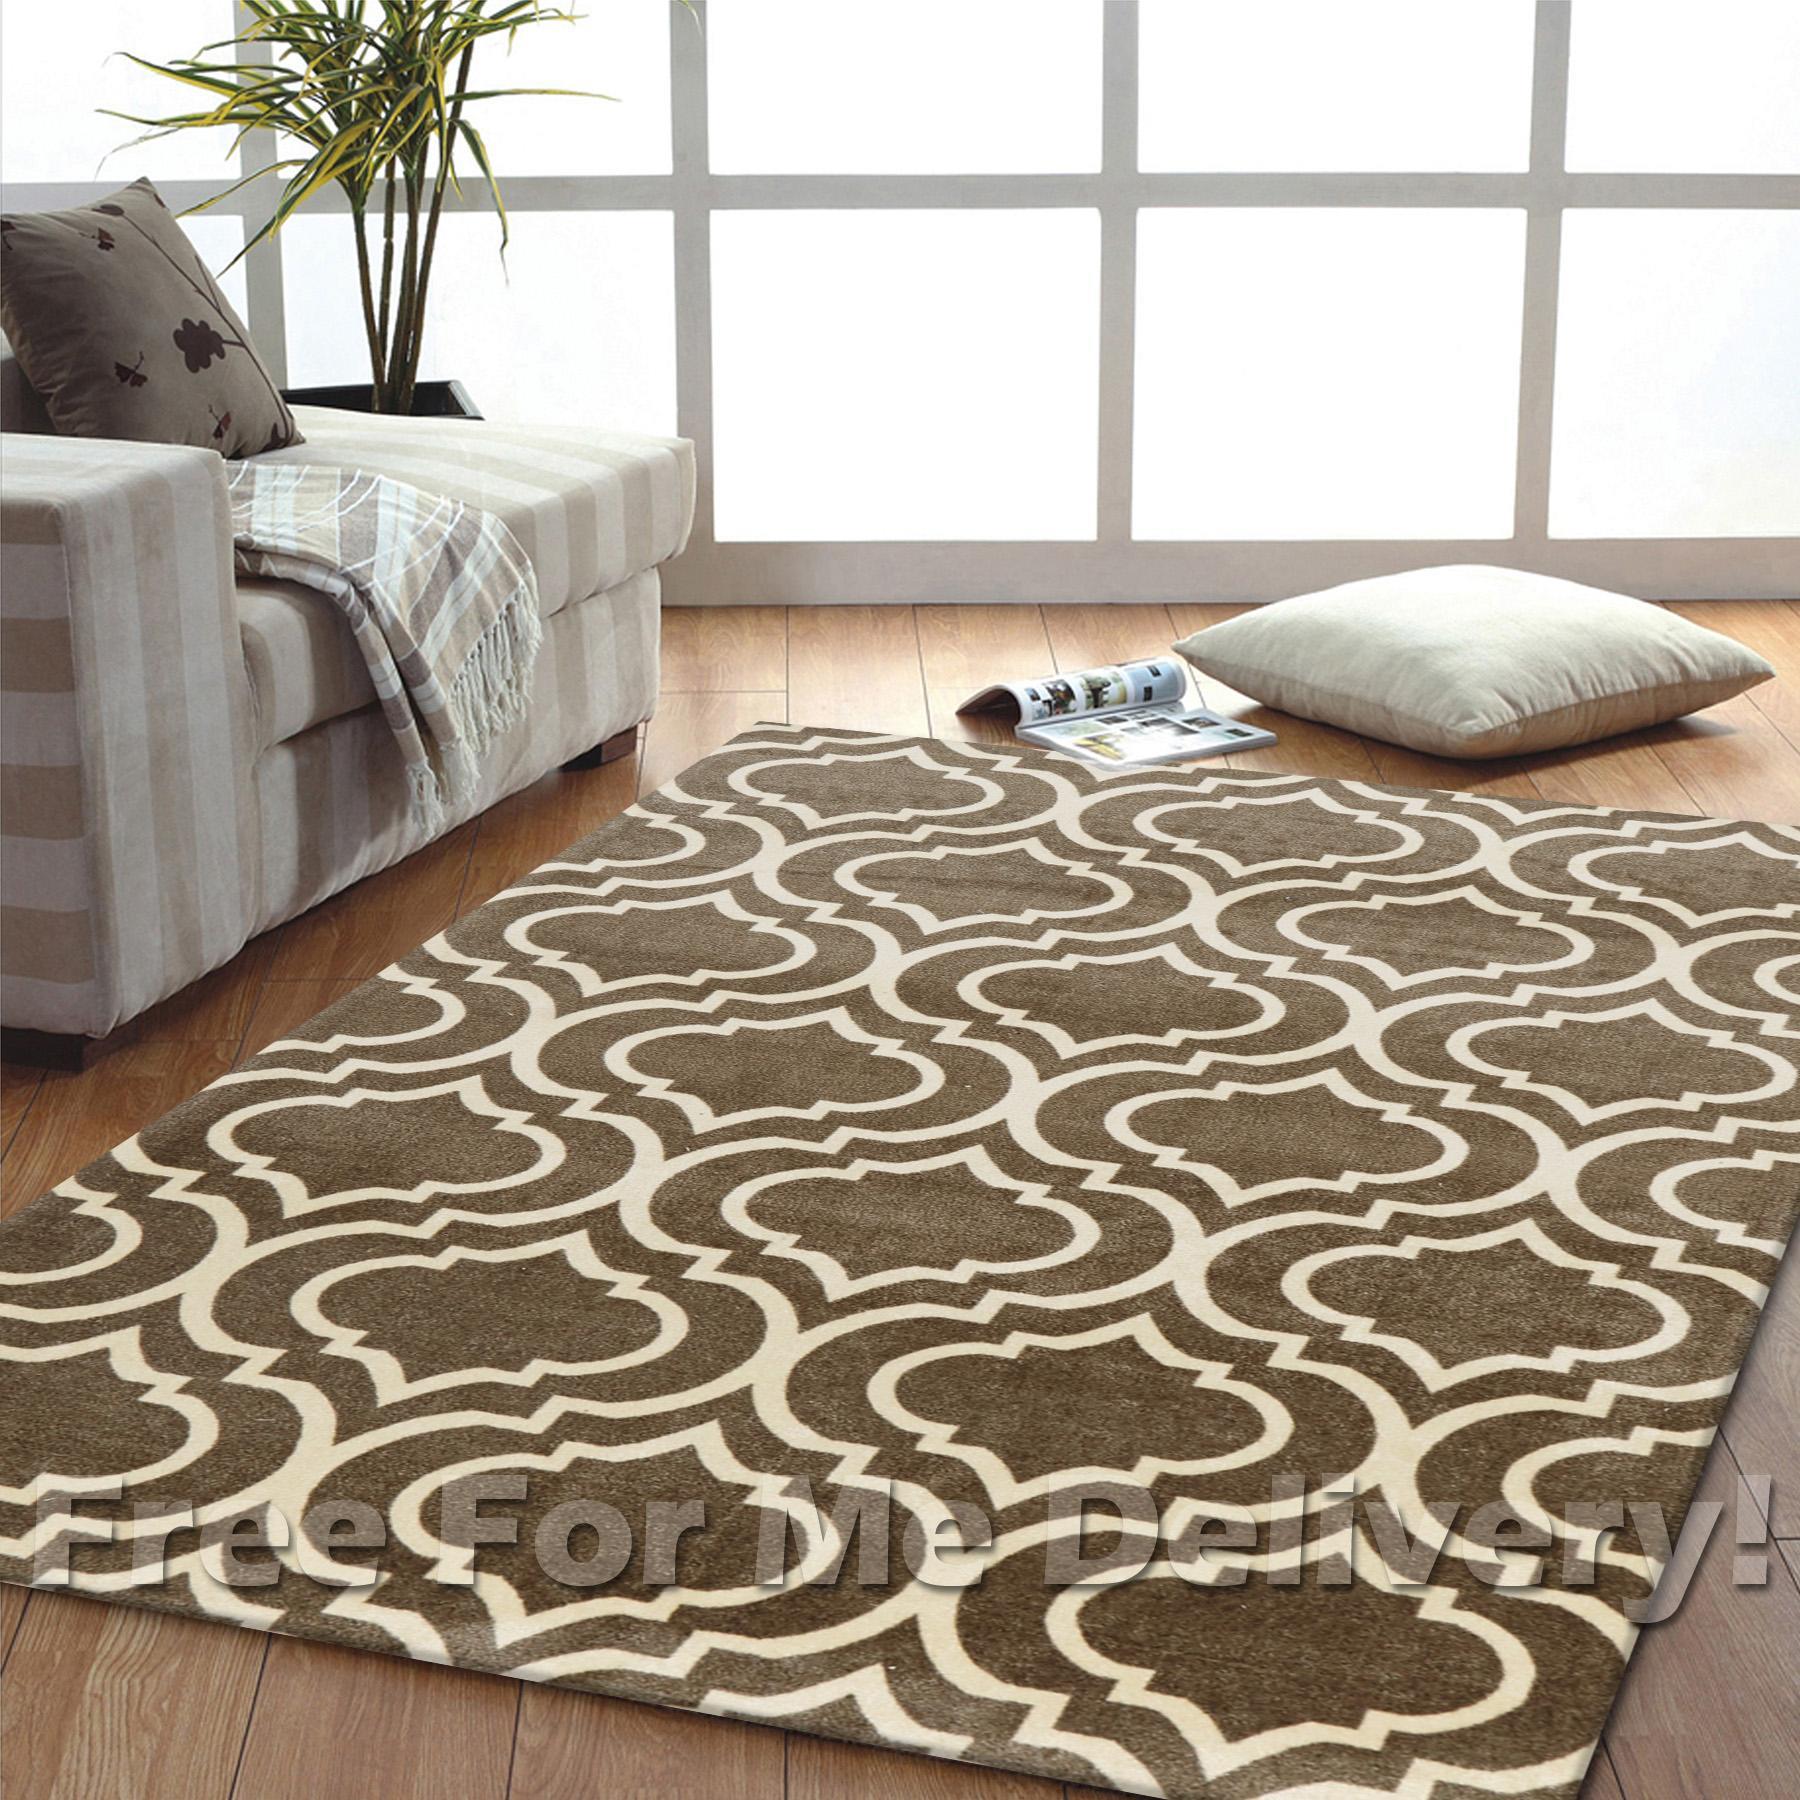 Urban Trellis Tile Brown Ash Designer Floor Rug (M) 150x220cm